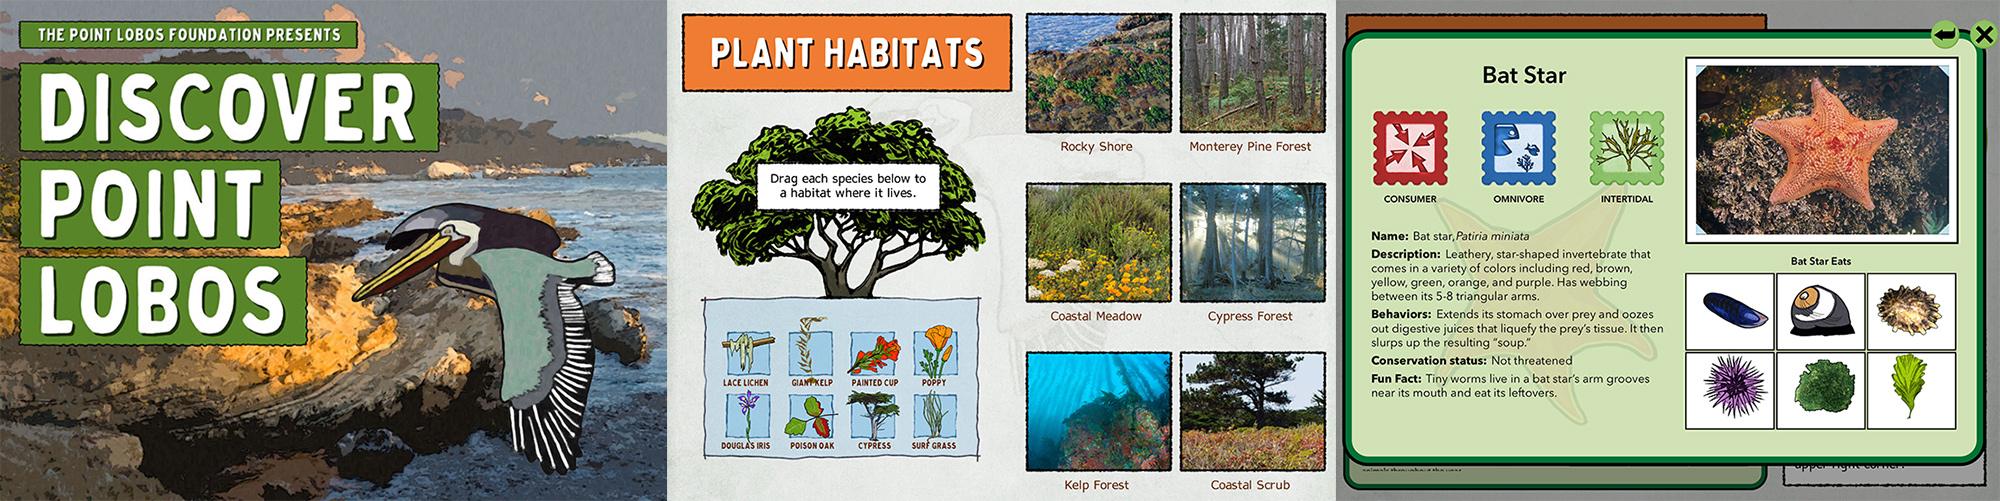 Discover Point Lobos App graphic